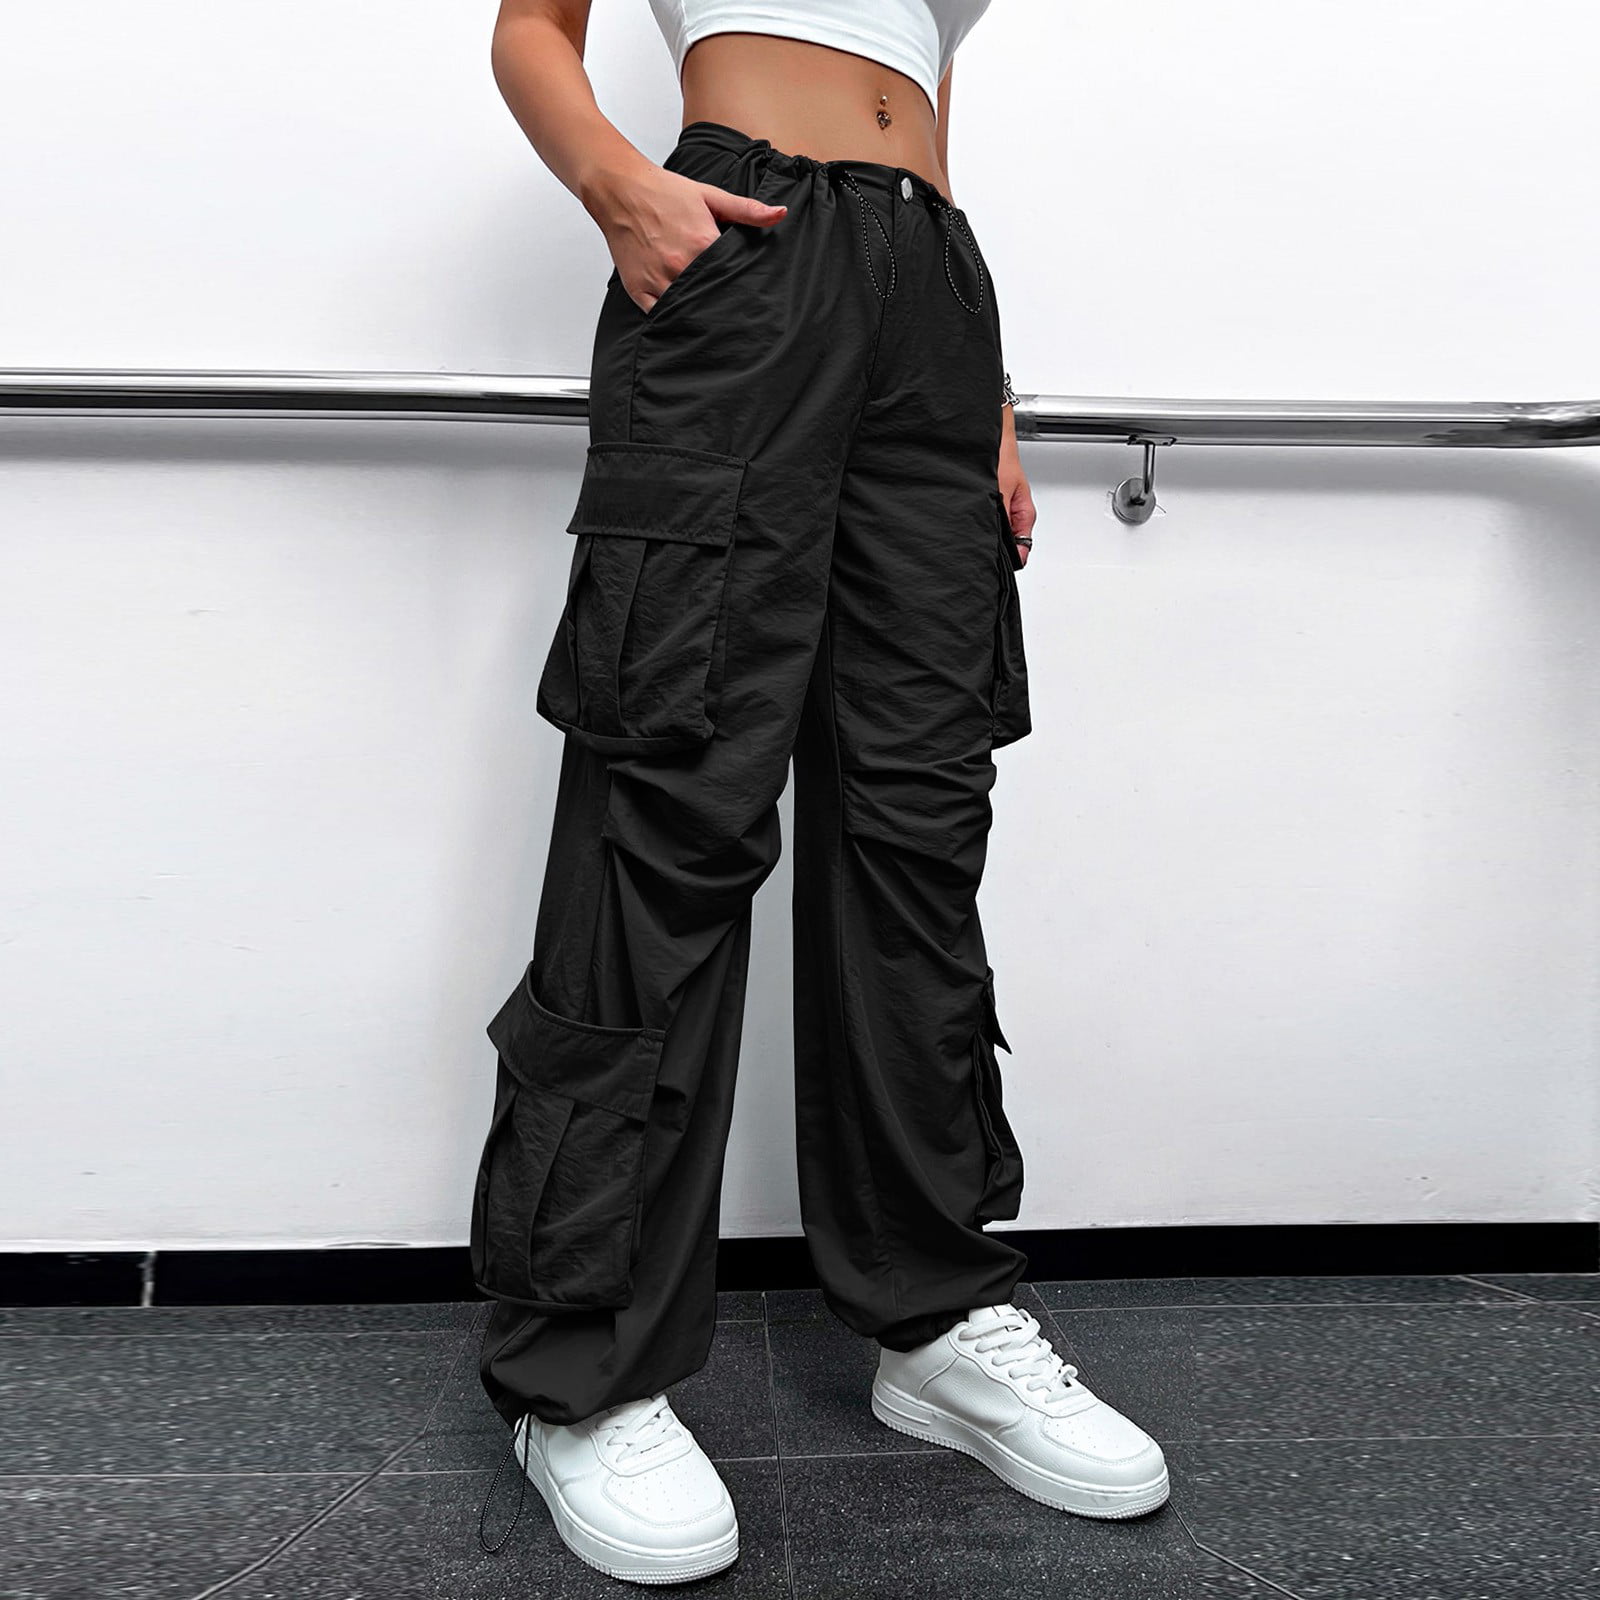 Black cargo pants outfit | Streetwear fashion women, Fashion inspo outfits,  Fashion